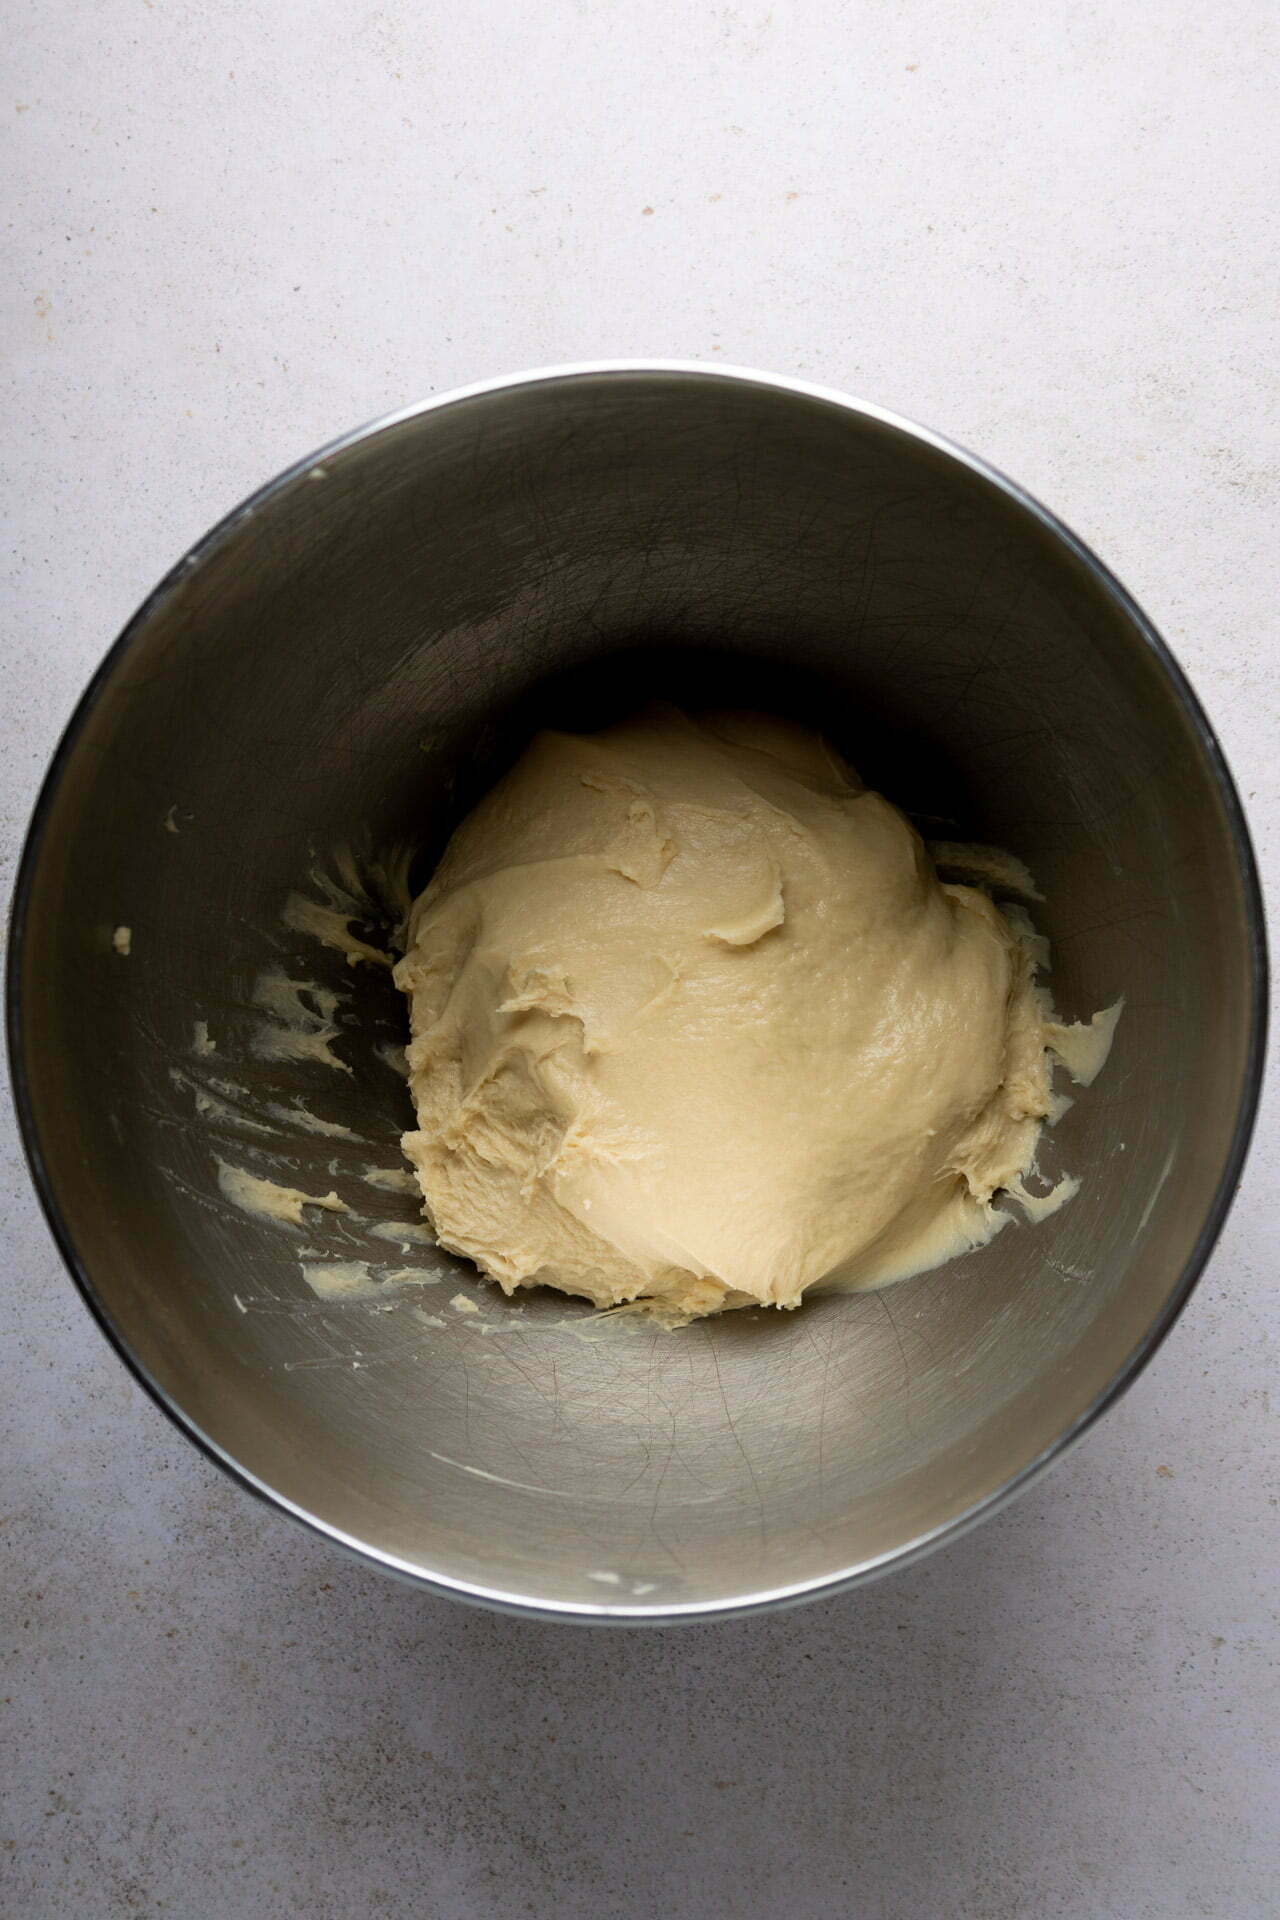 A vegan bowl full of dough on a white surface, ready for vegan baking.